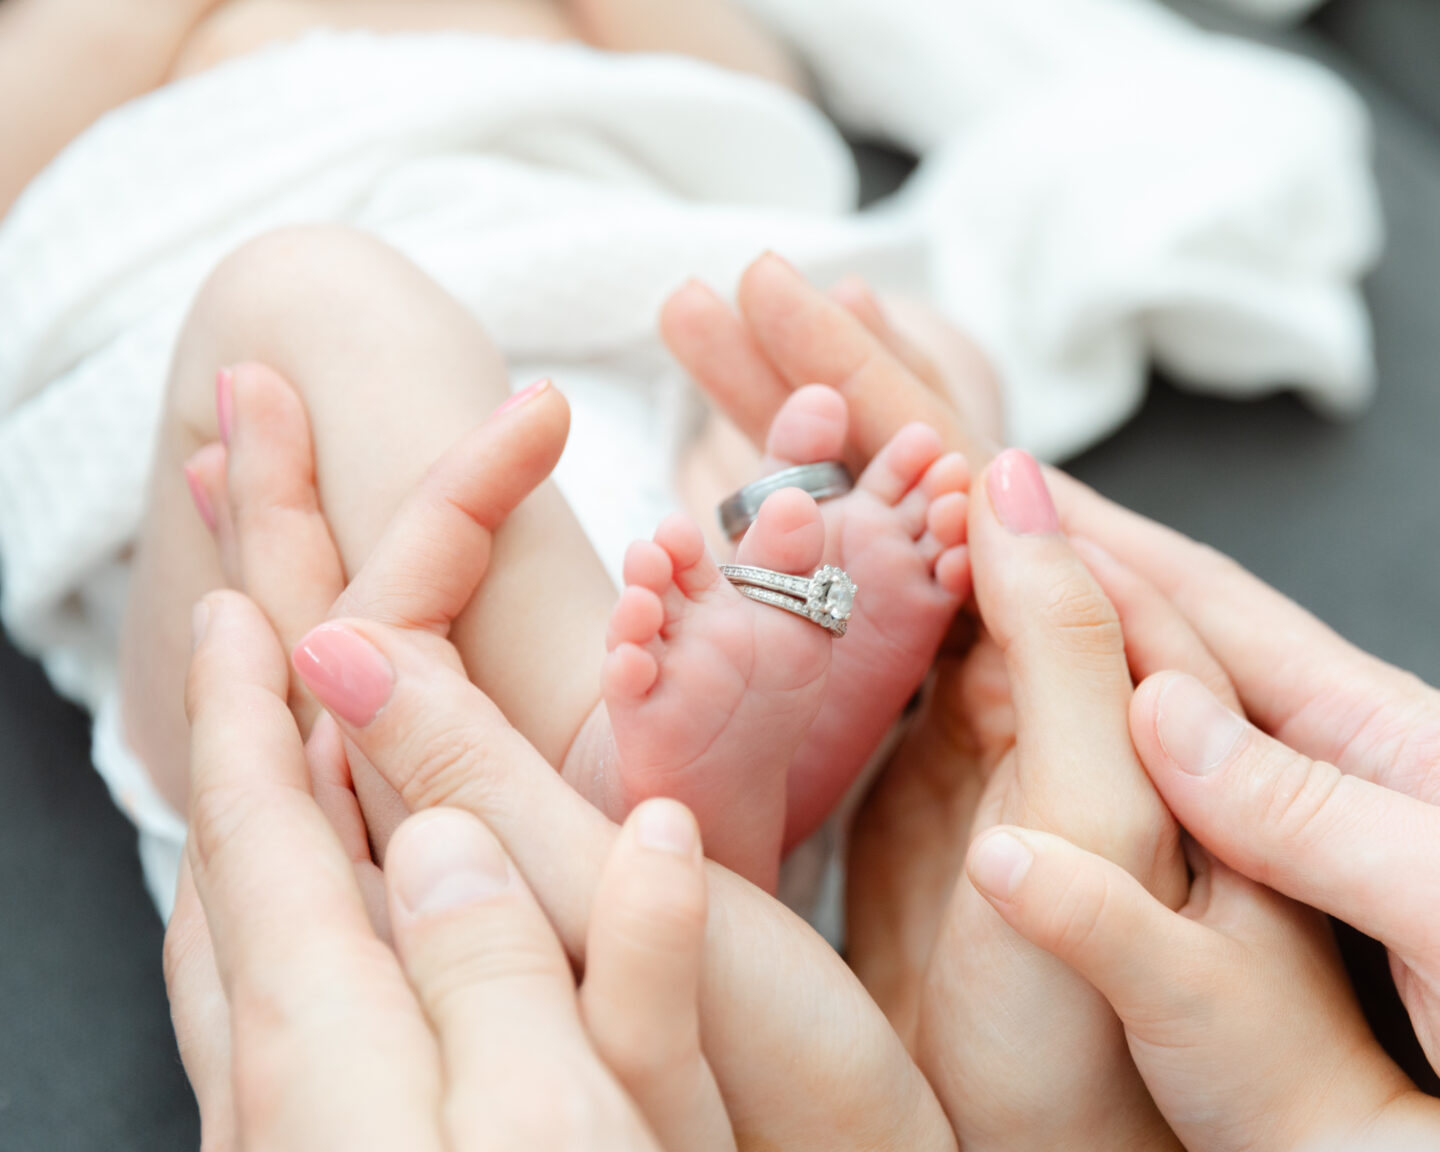 OUR NEWBORN PHOTOS - Philadelphia newborn photography on Coming Up Roses